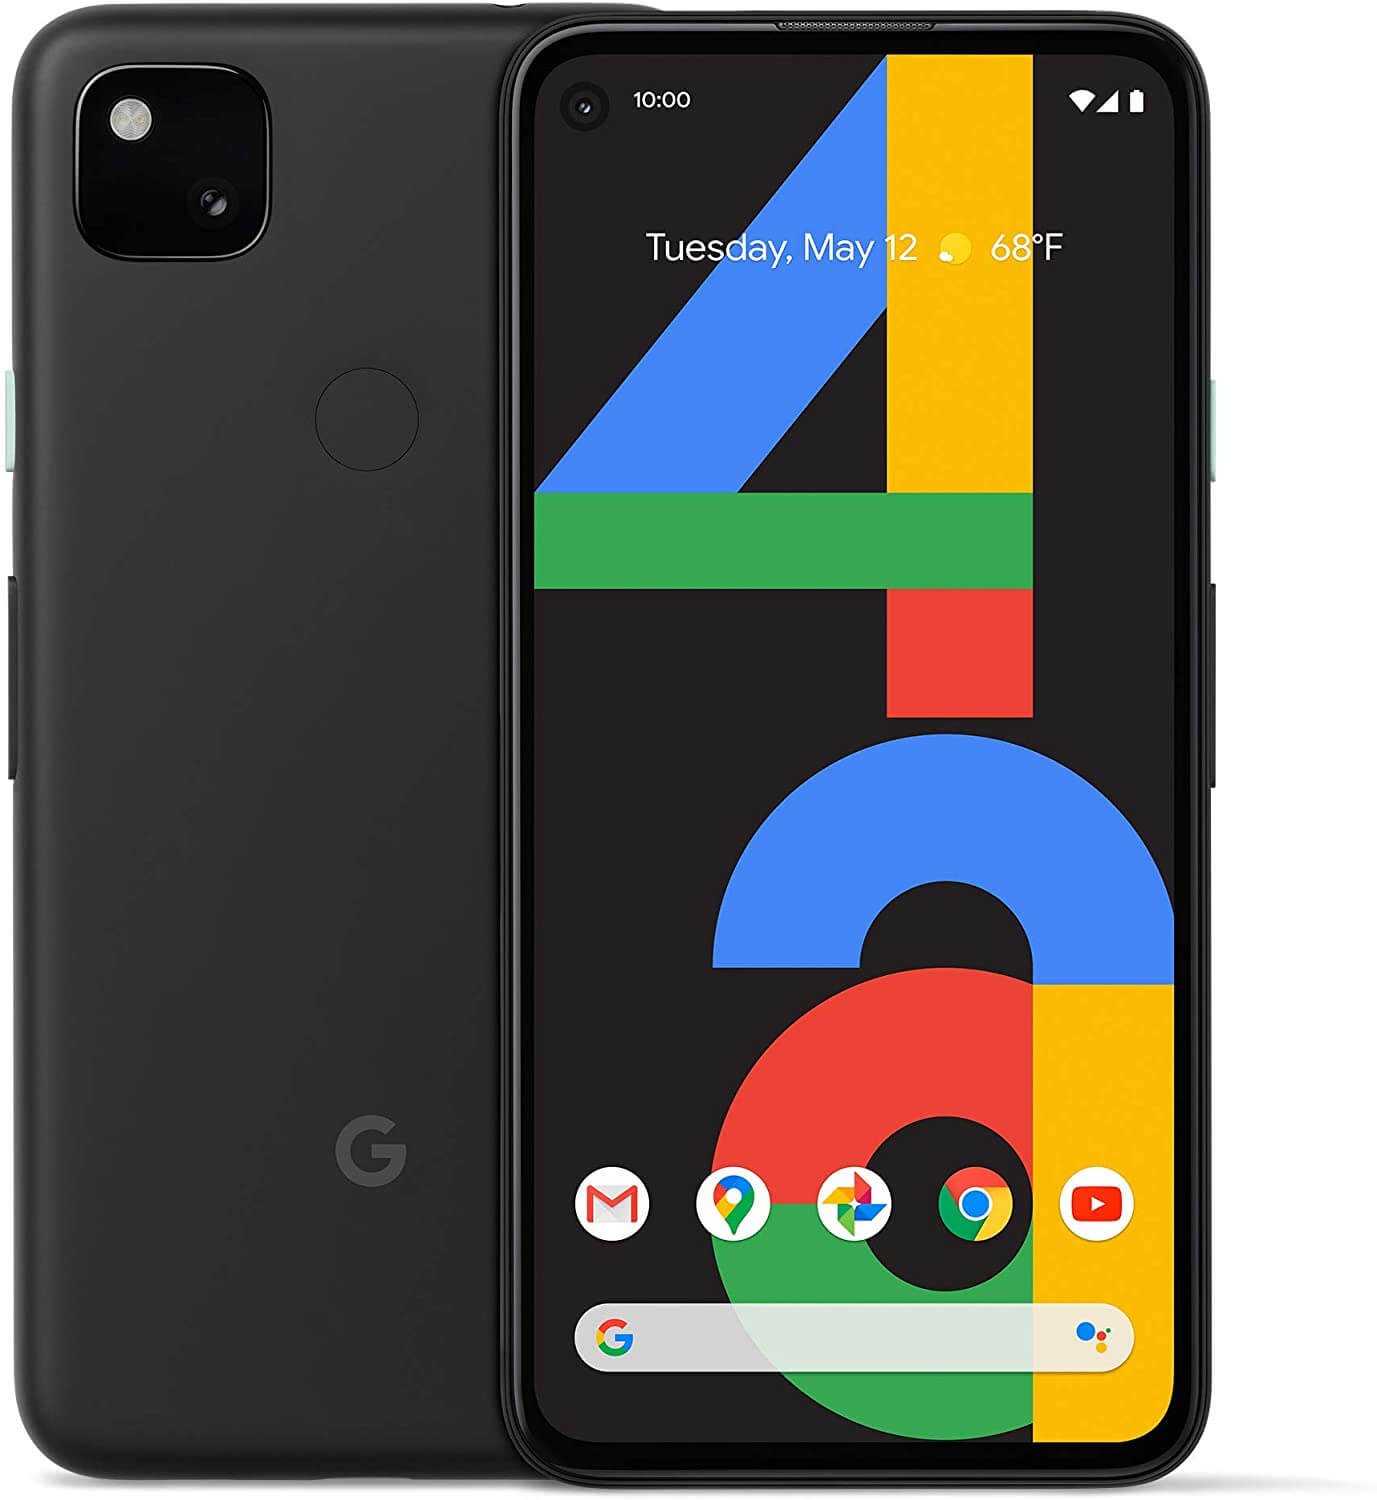 Insightful Details About Google Pixel 4